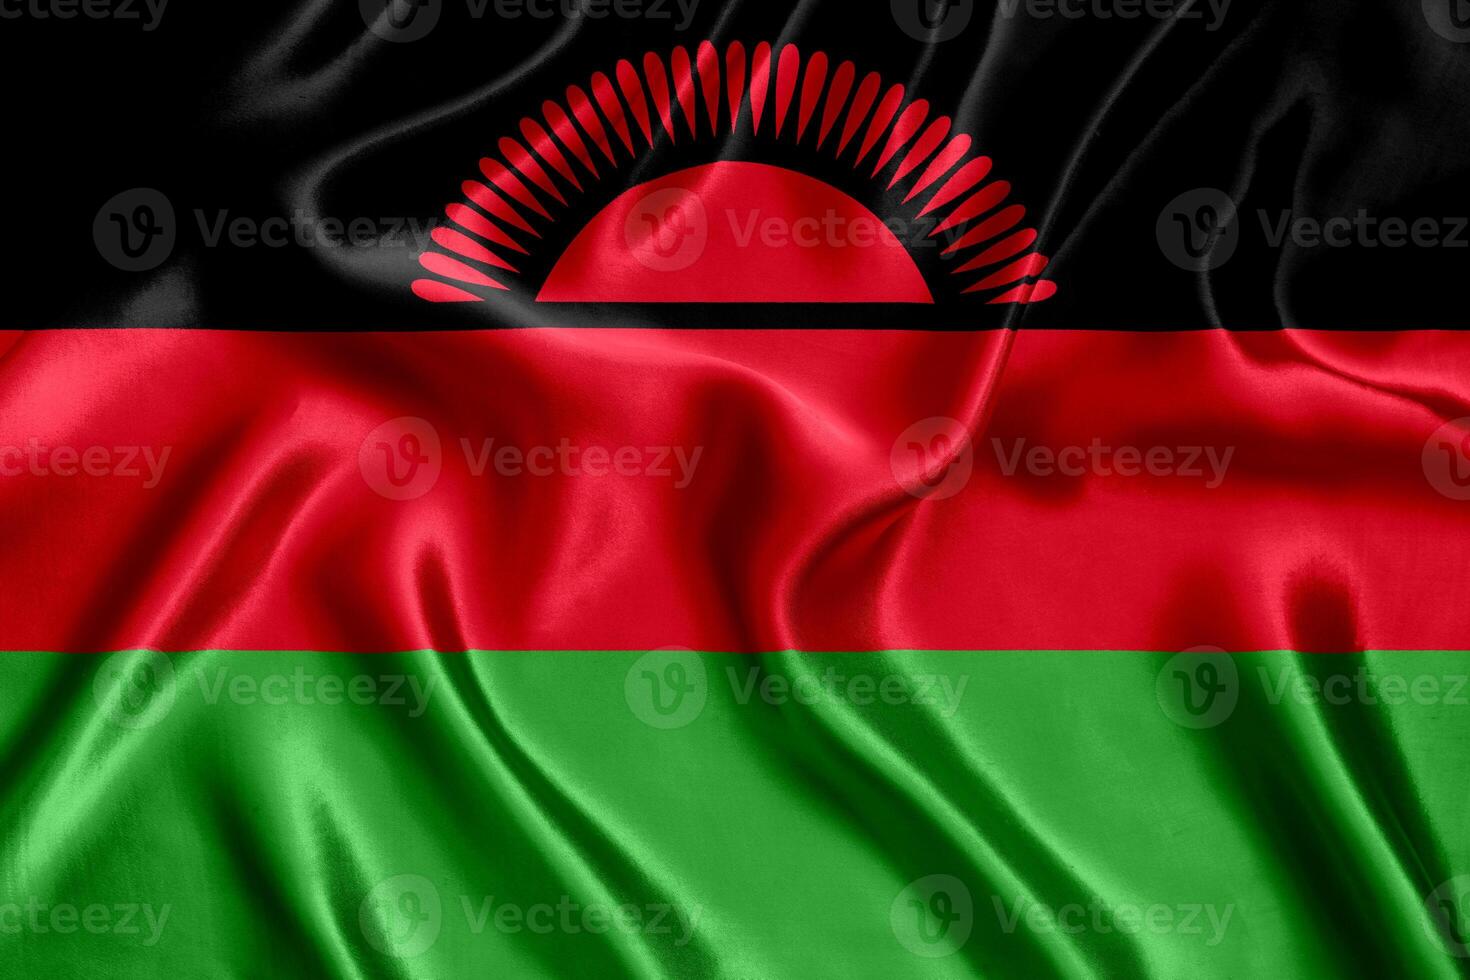 Flag of Malawi silk close-up photo